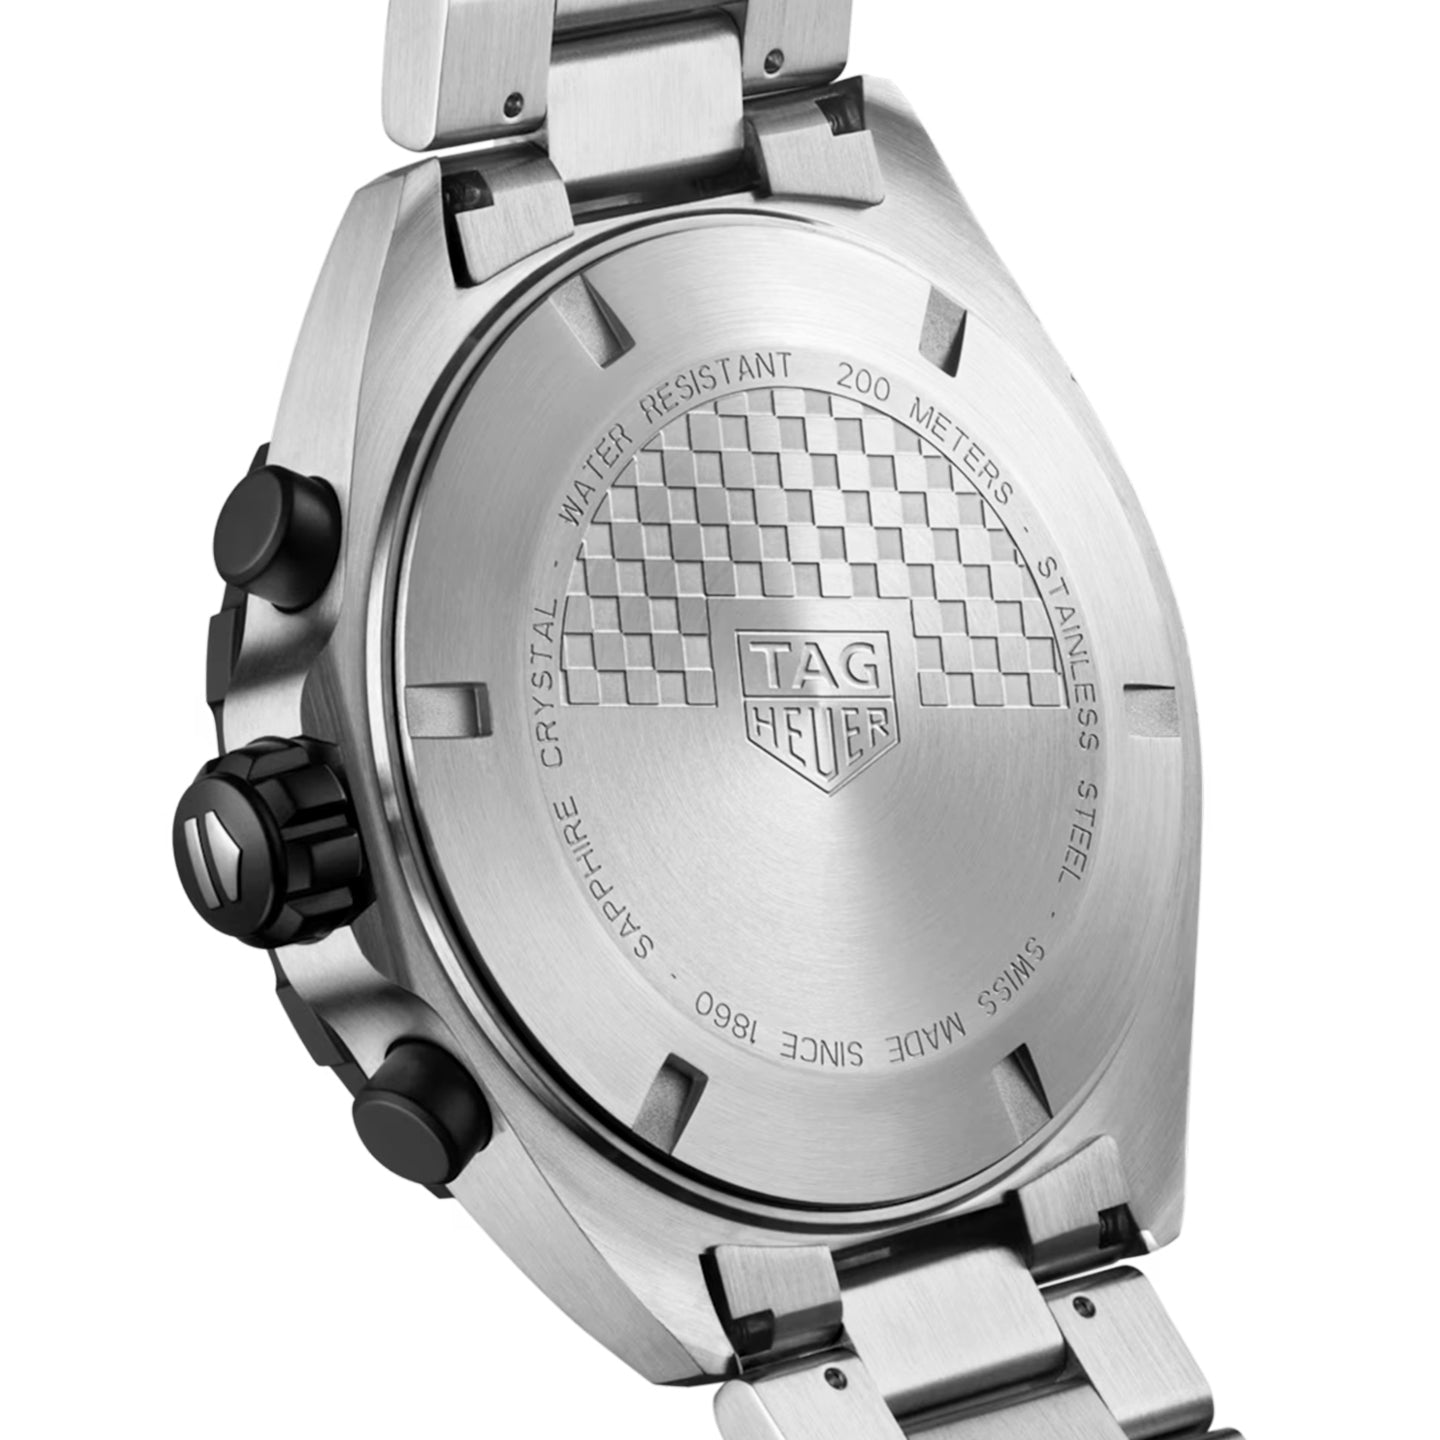 Formula 1 43mm Green Dial Men's Chronograph Bracelet Watch